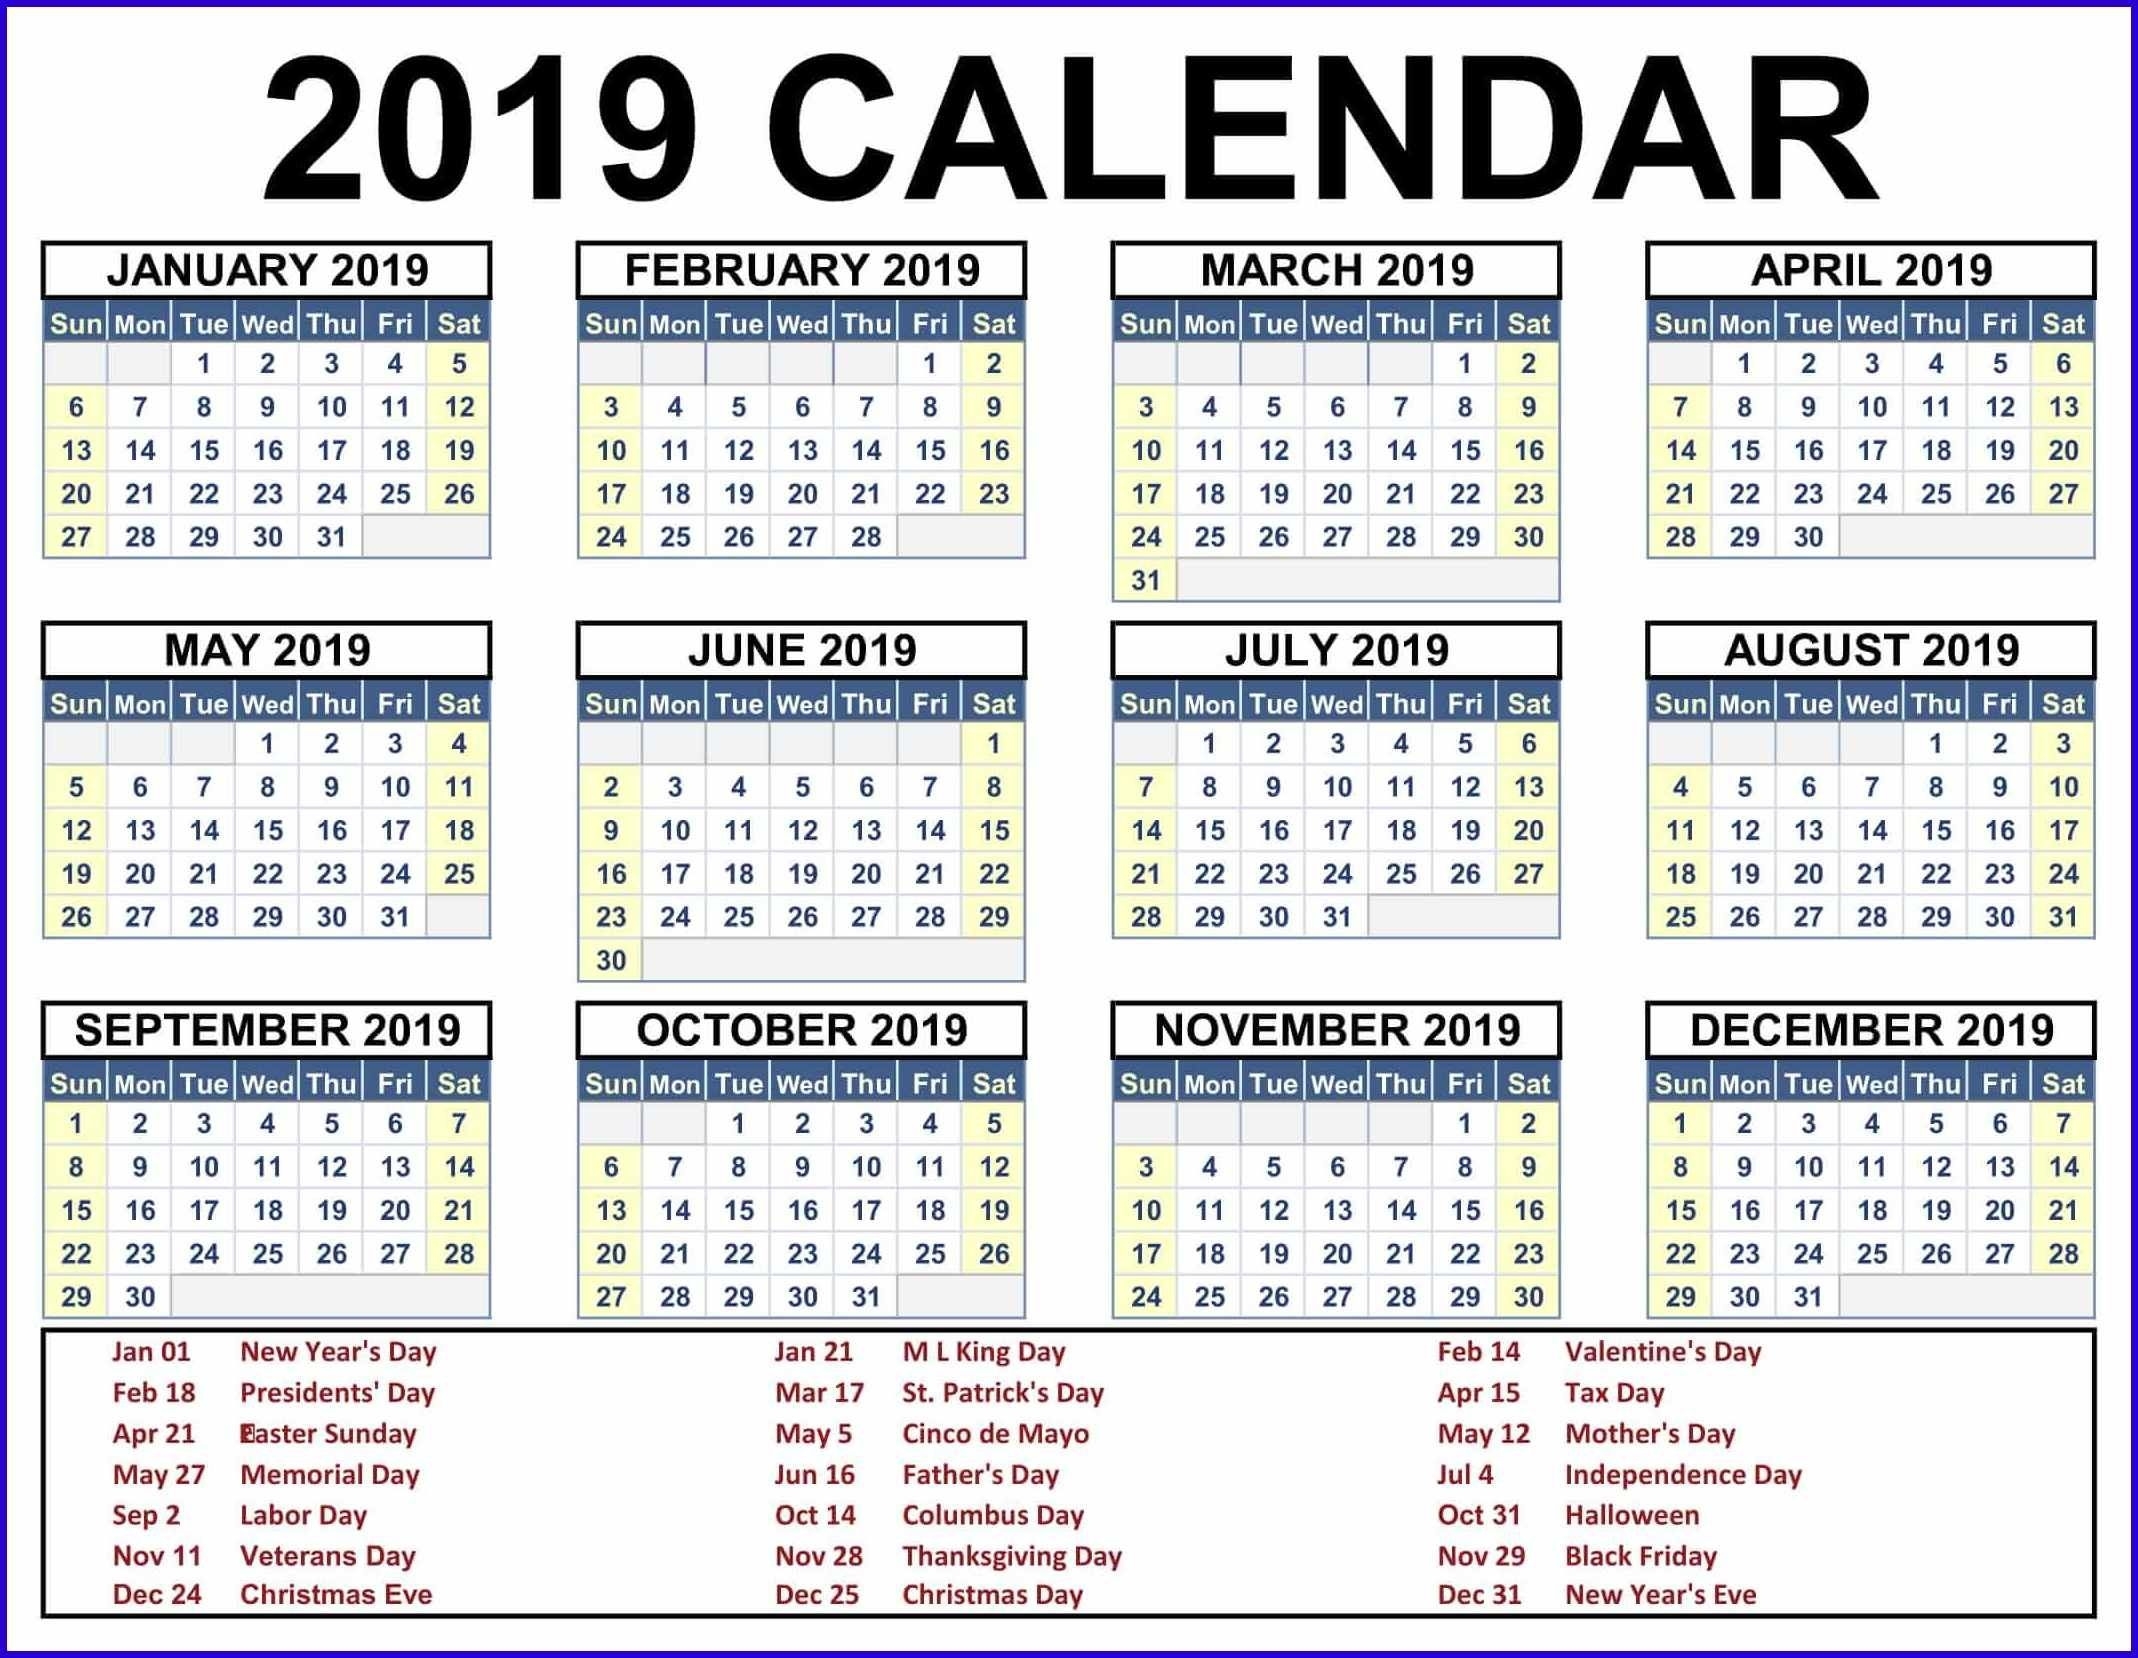 Printable Calendar 2019 With Holidays | Calendar 2019 Perky Printable 2020 Calendar With School Terms And Public Holidays